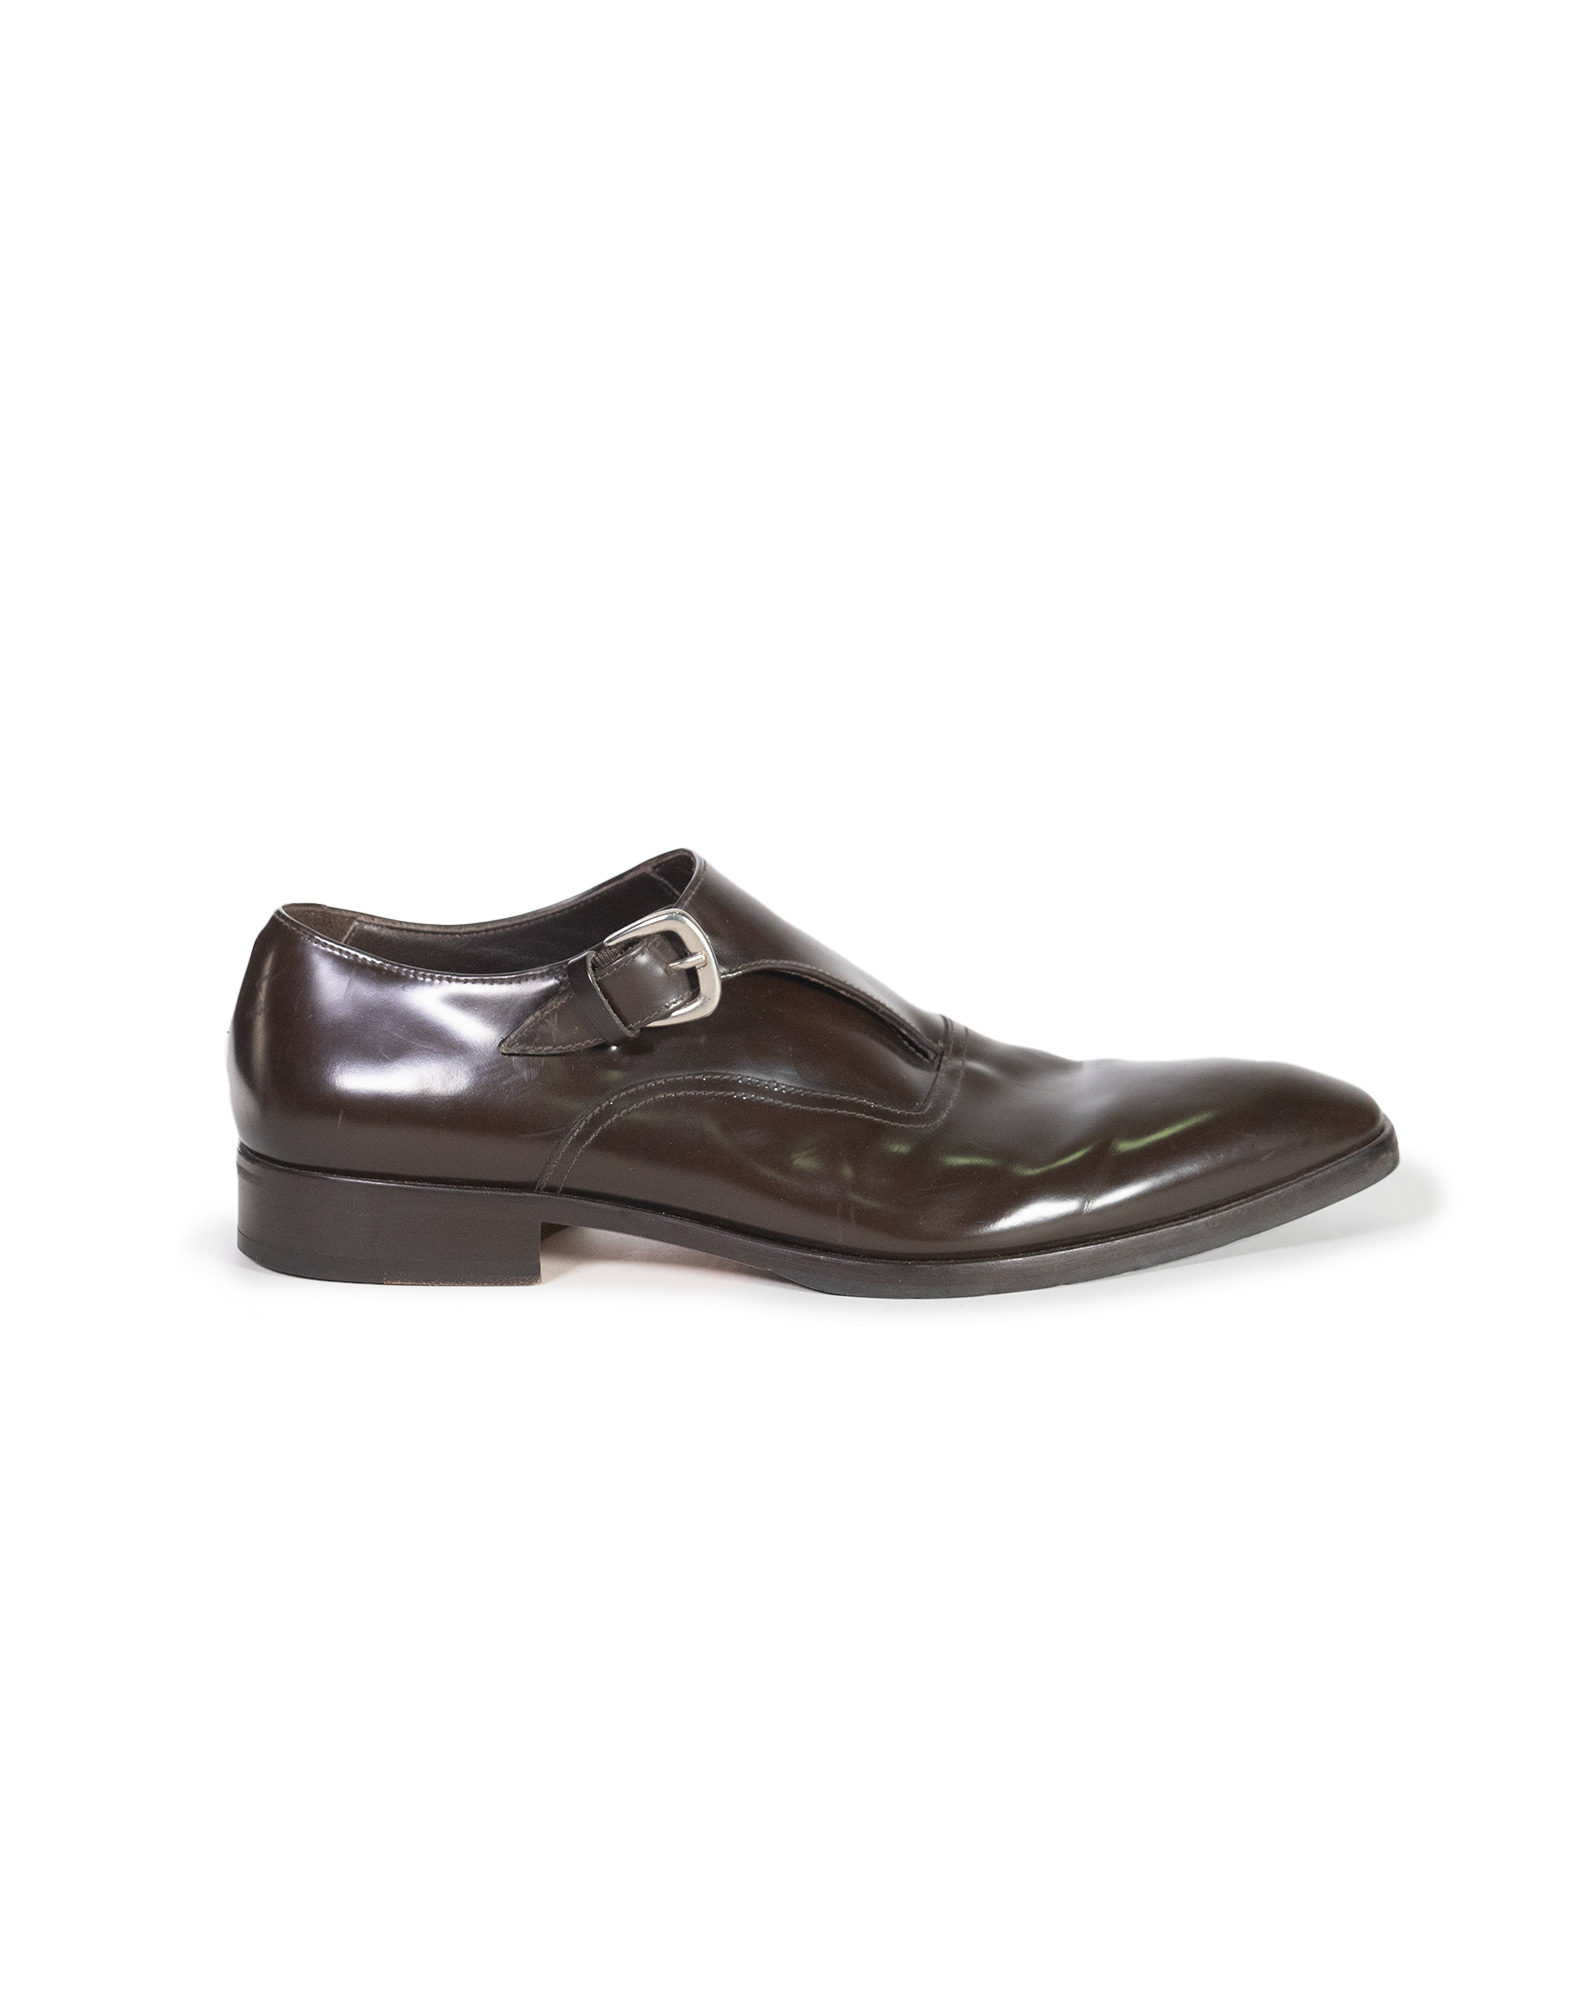 Pollini - Men's leather shoes